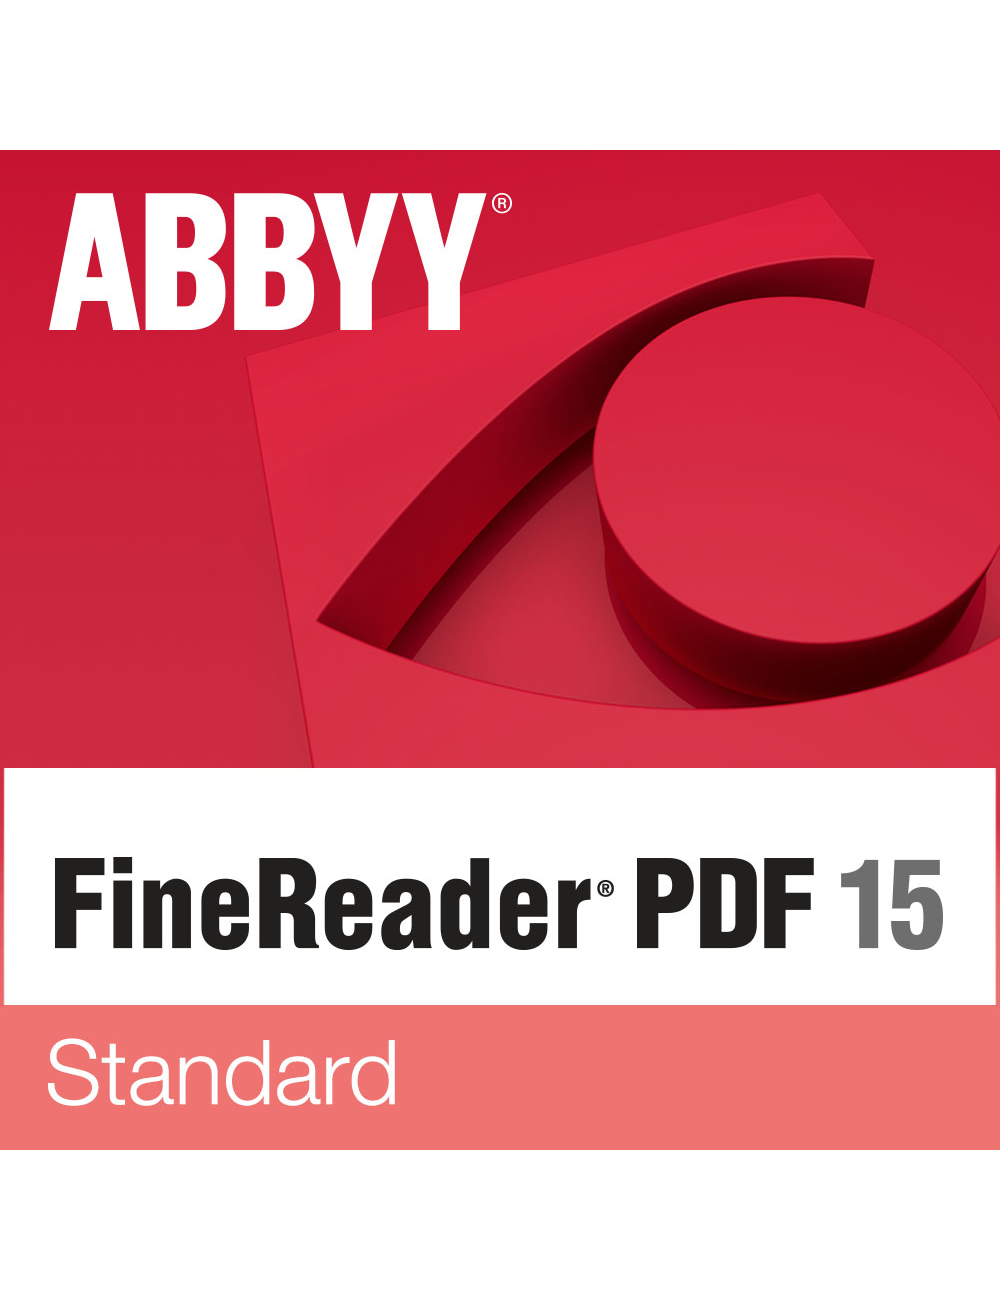 Abbyy finereader pdf download essentials of economics pdf free download